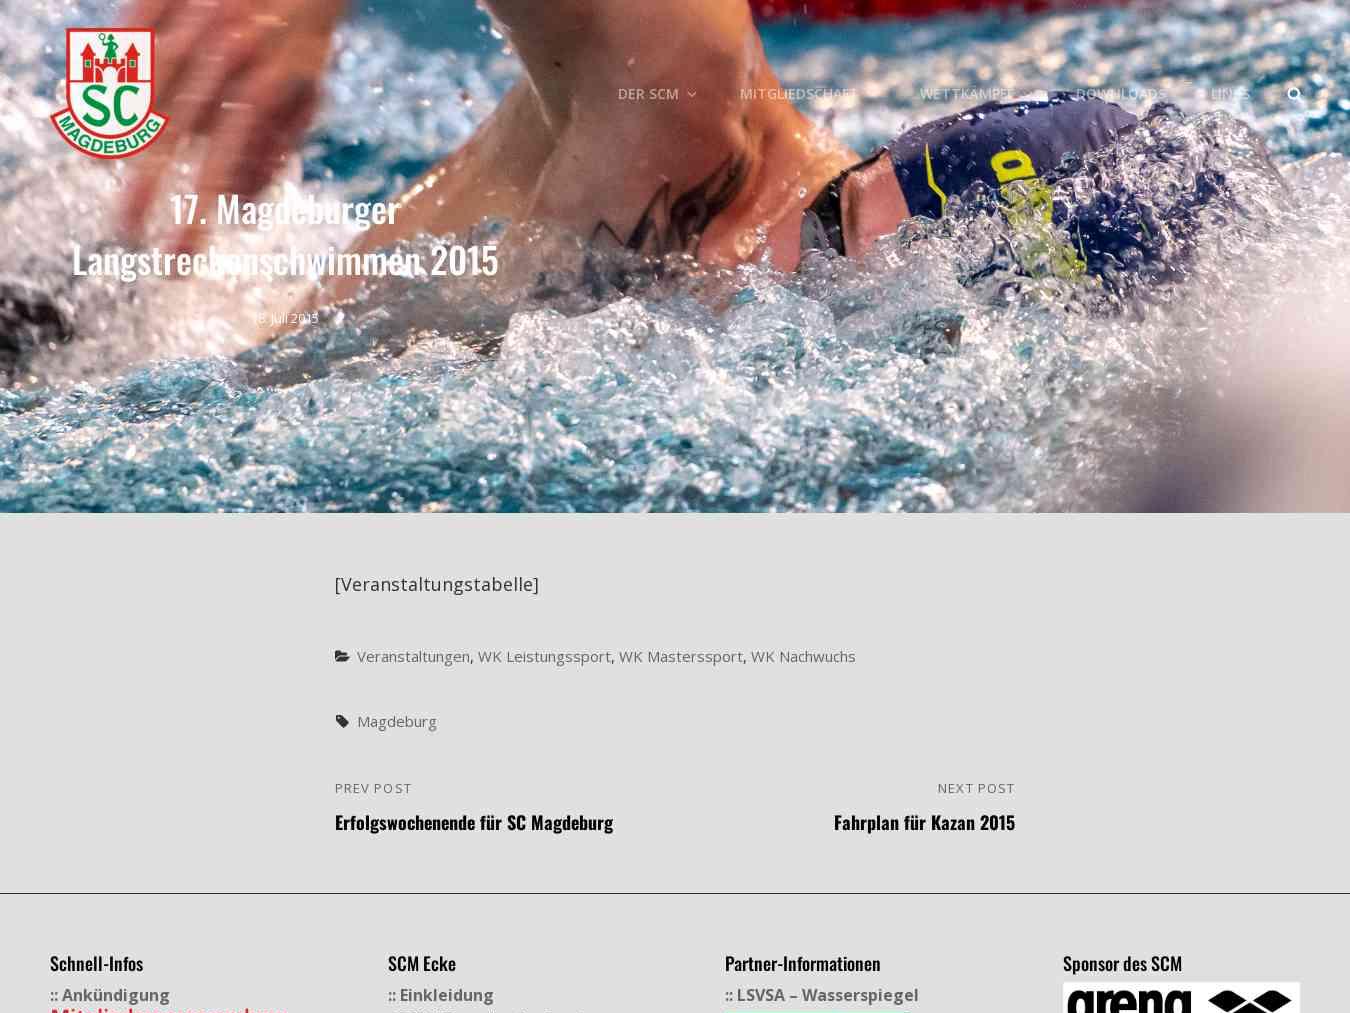 Veranstalterhomepage - http://scm-schwimmen.de/2015/07/17-magdeburger-langstreckenschwimmen-2015/